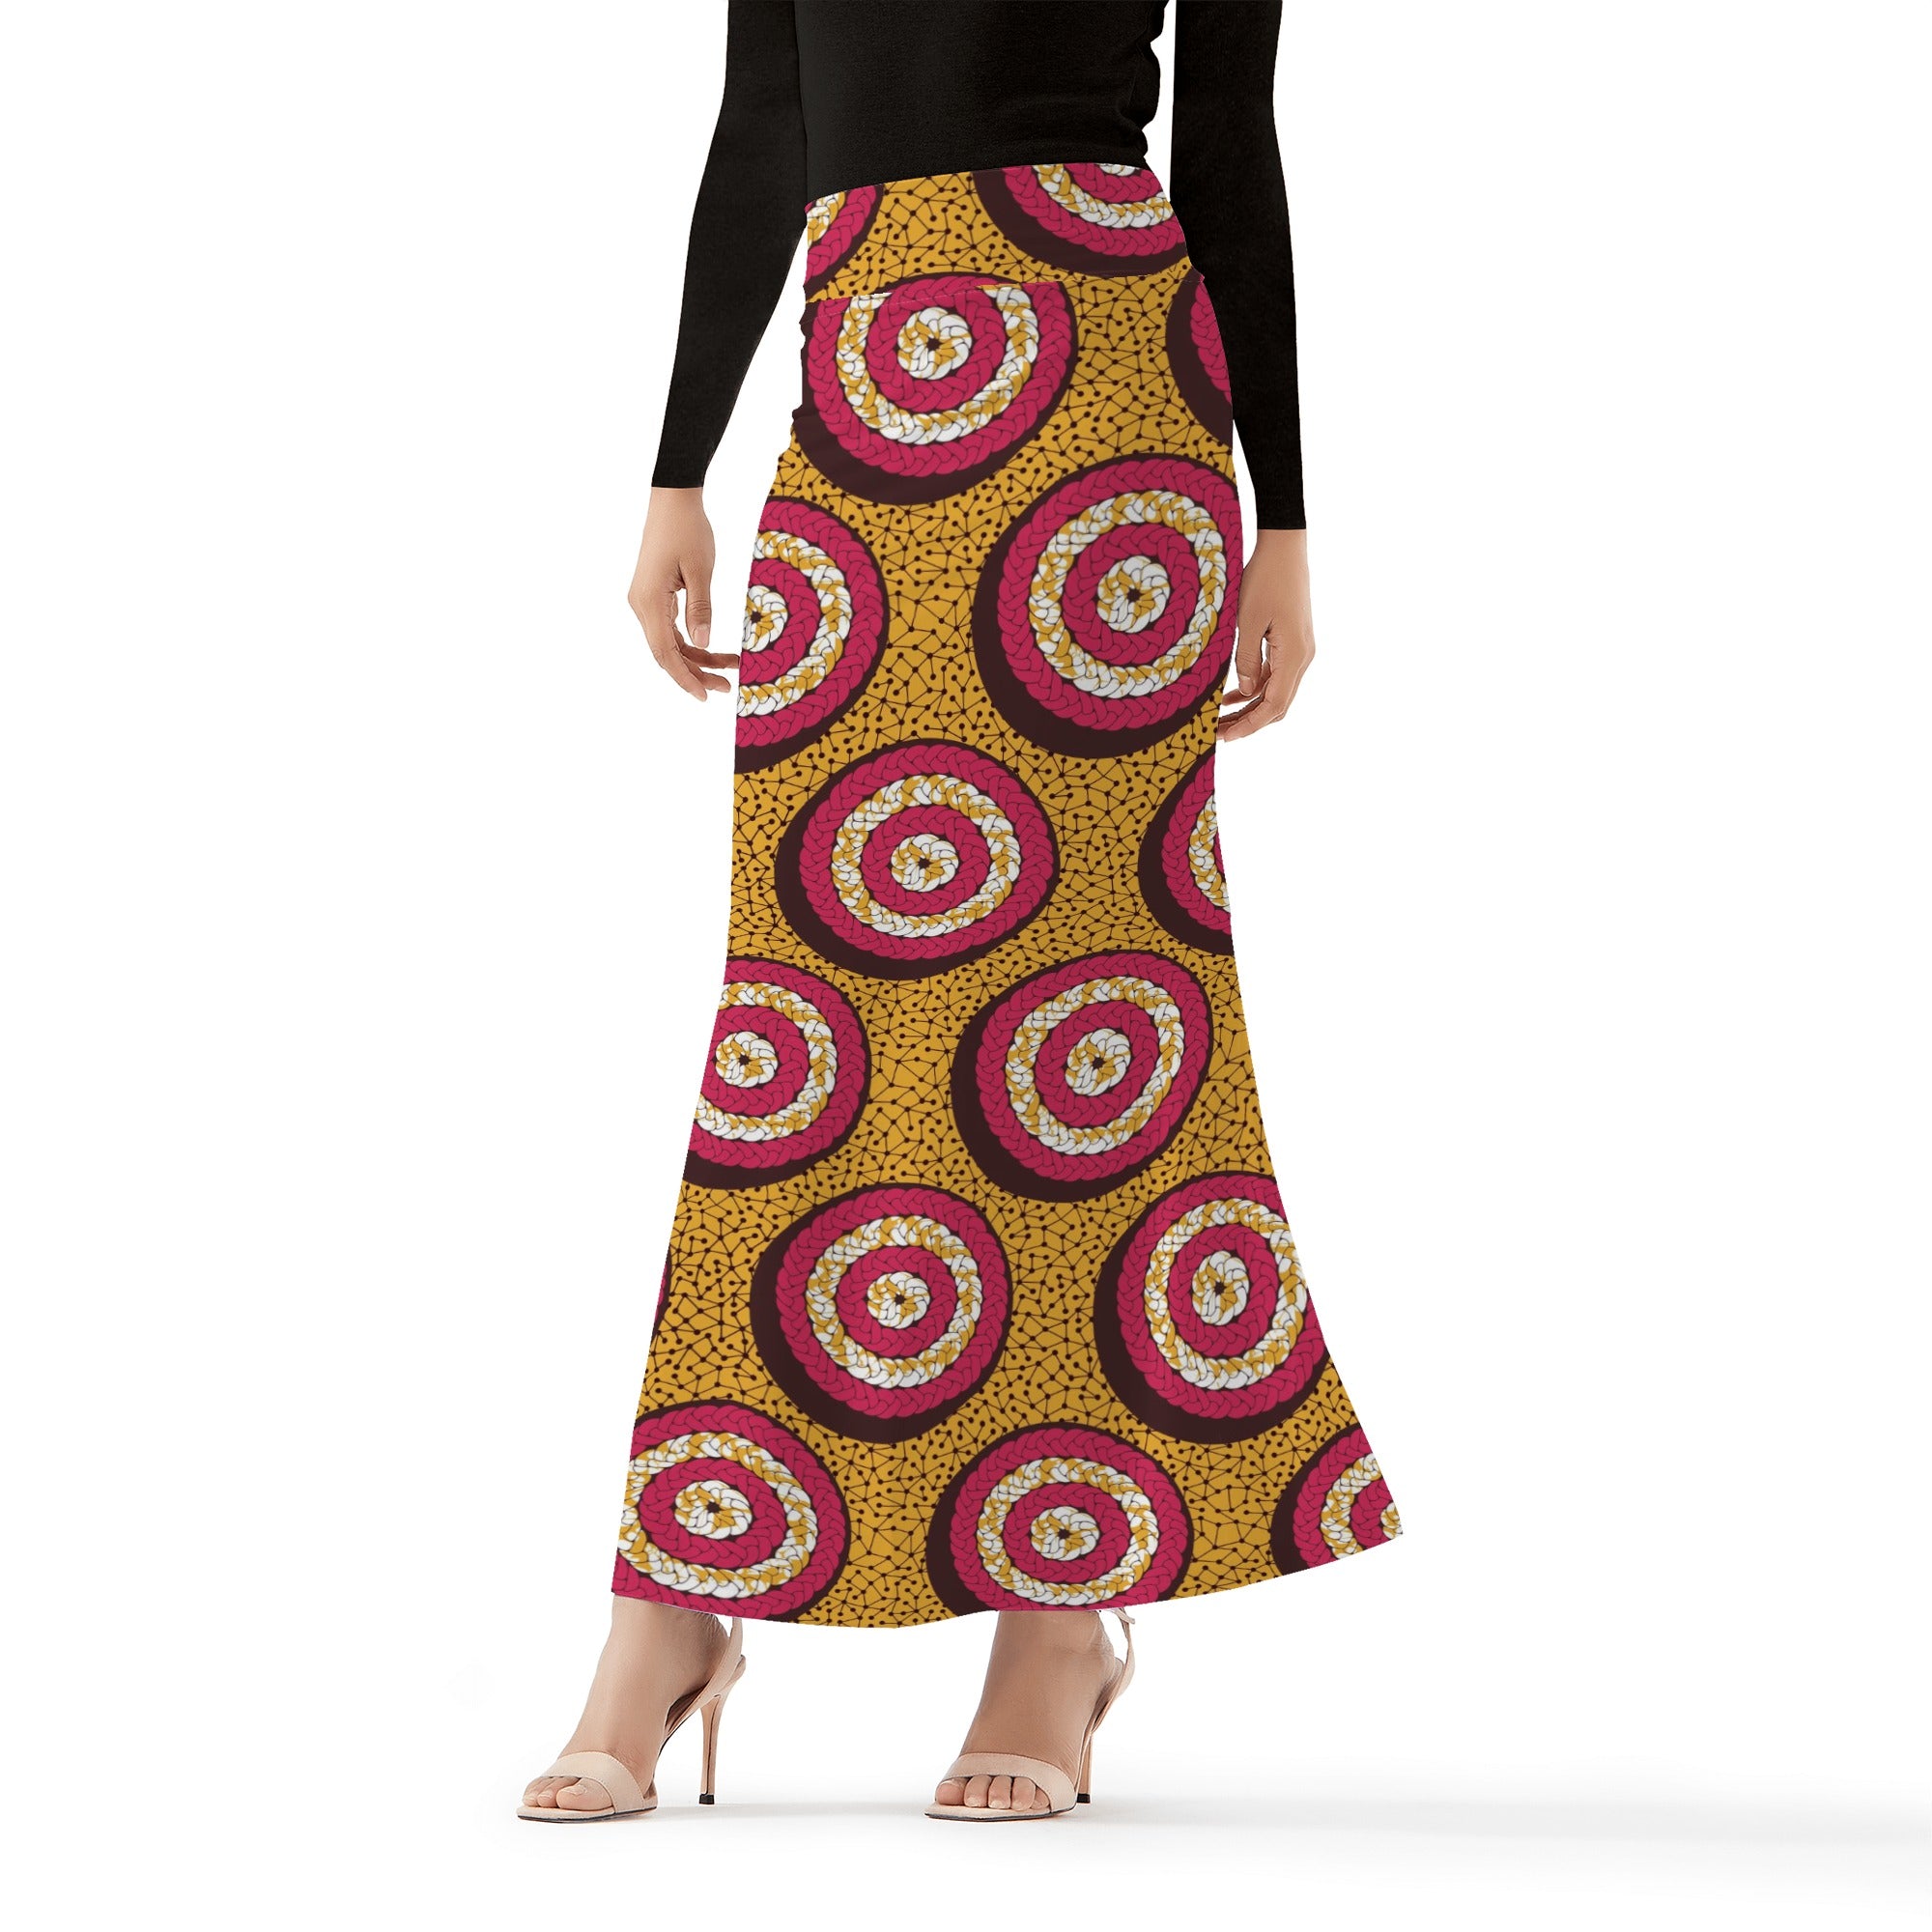 Women's Full Length Skirt in Ankara Prints - African Ankara Prints and Designs | Sumbu Apparel